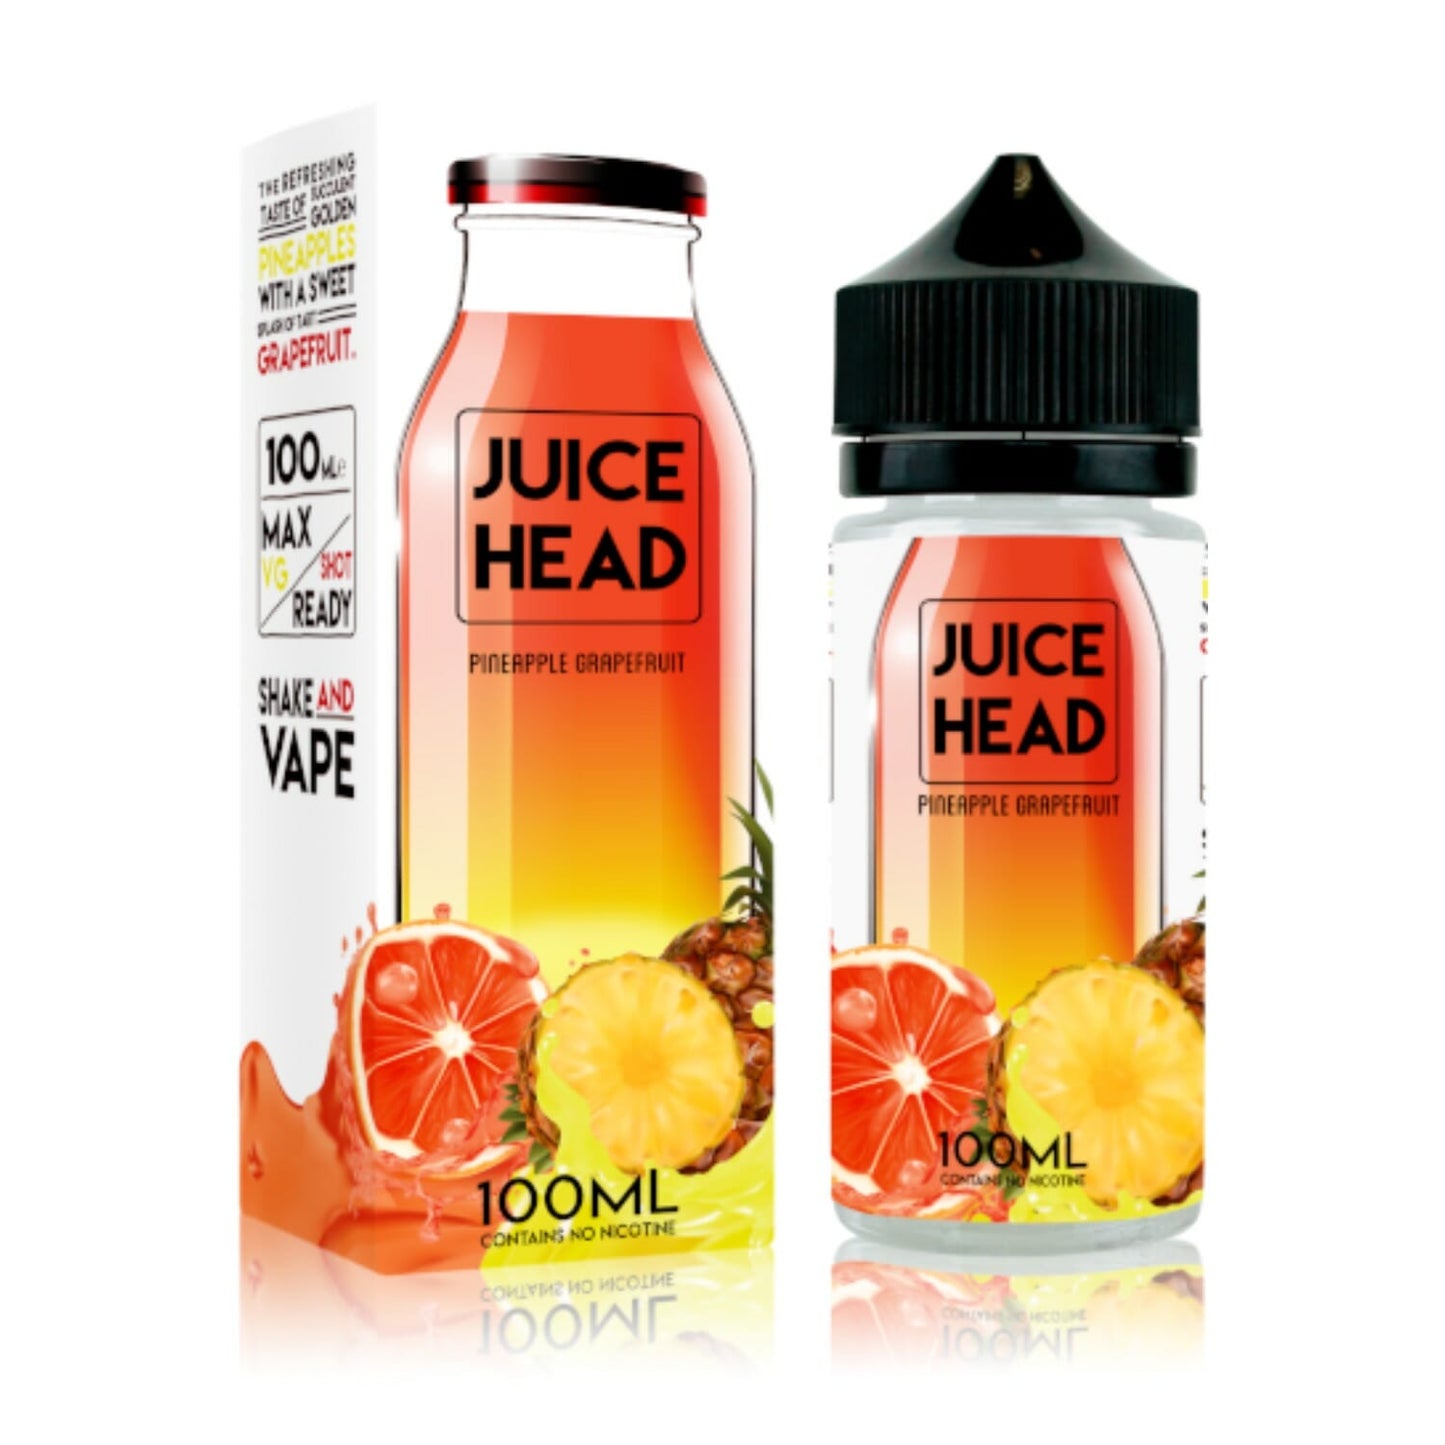 Juice Head - Pineapple Grapefruit